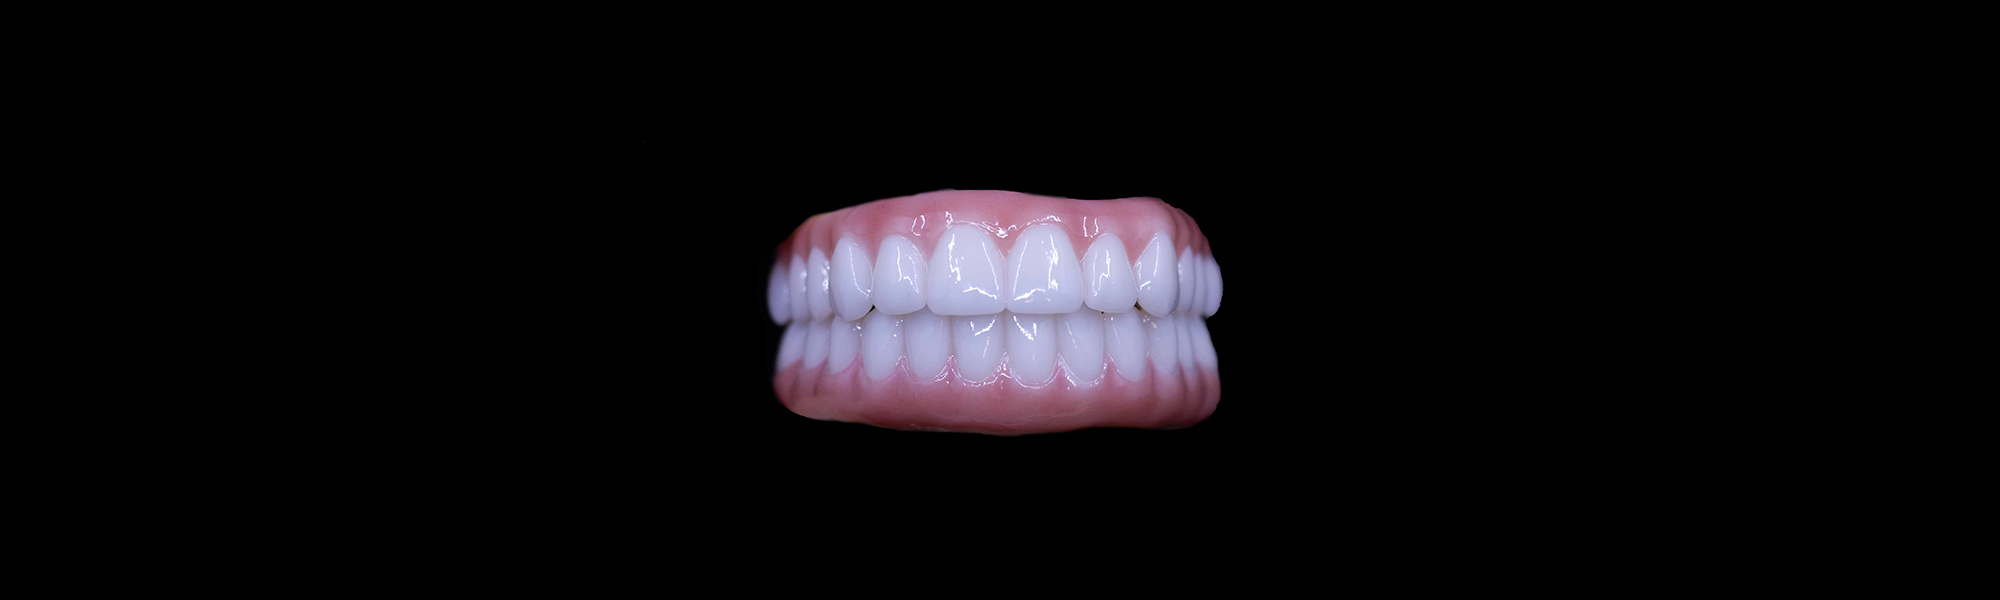 zirconia dental implants full set isolated on black